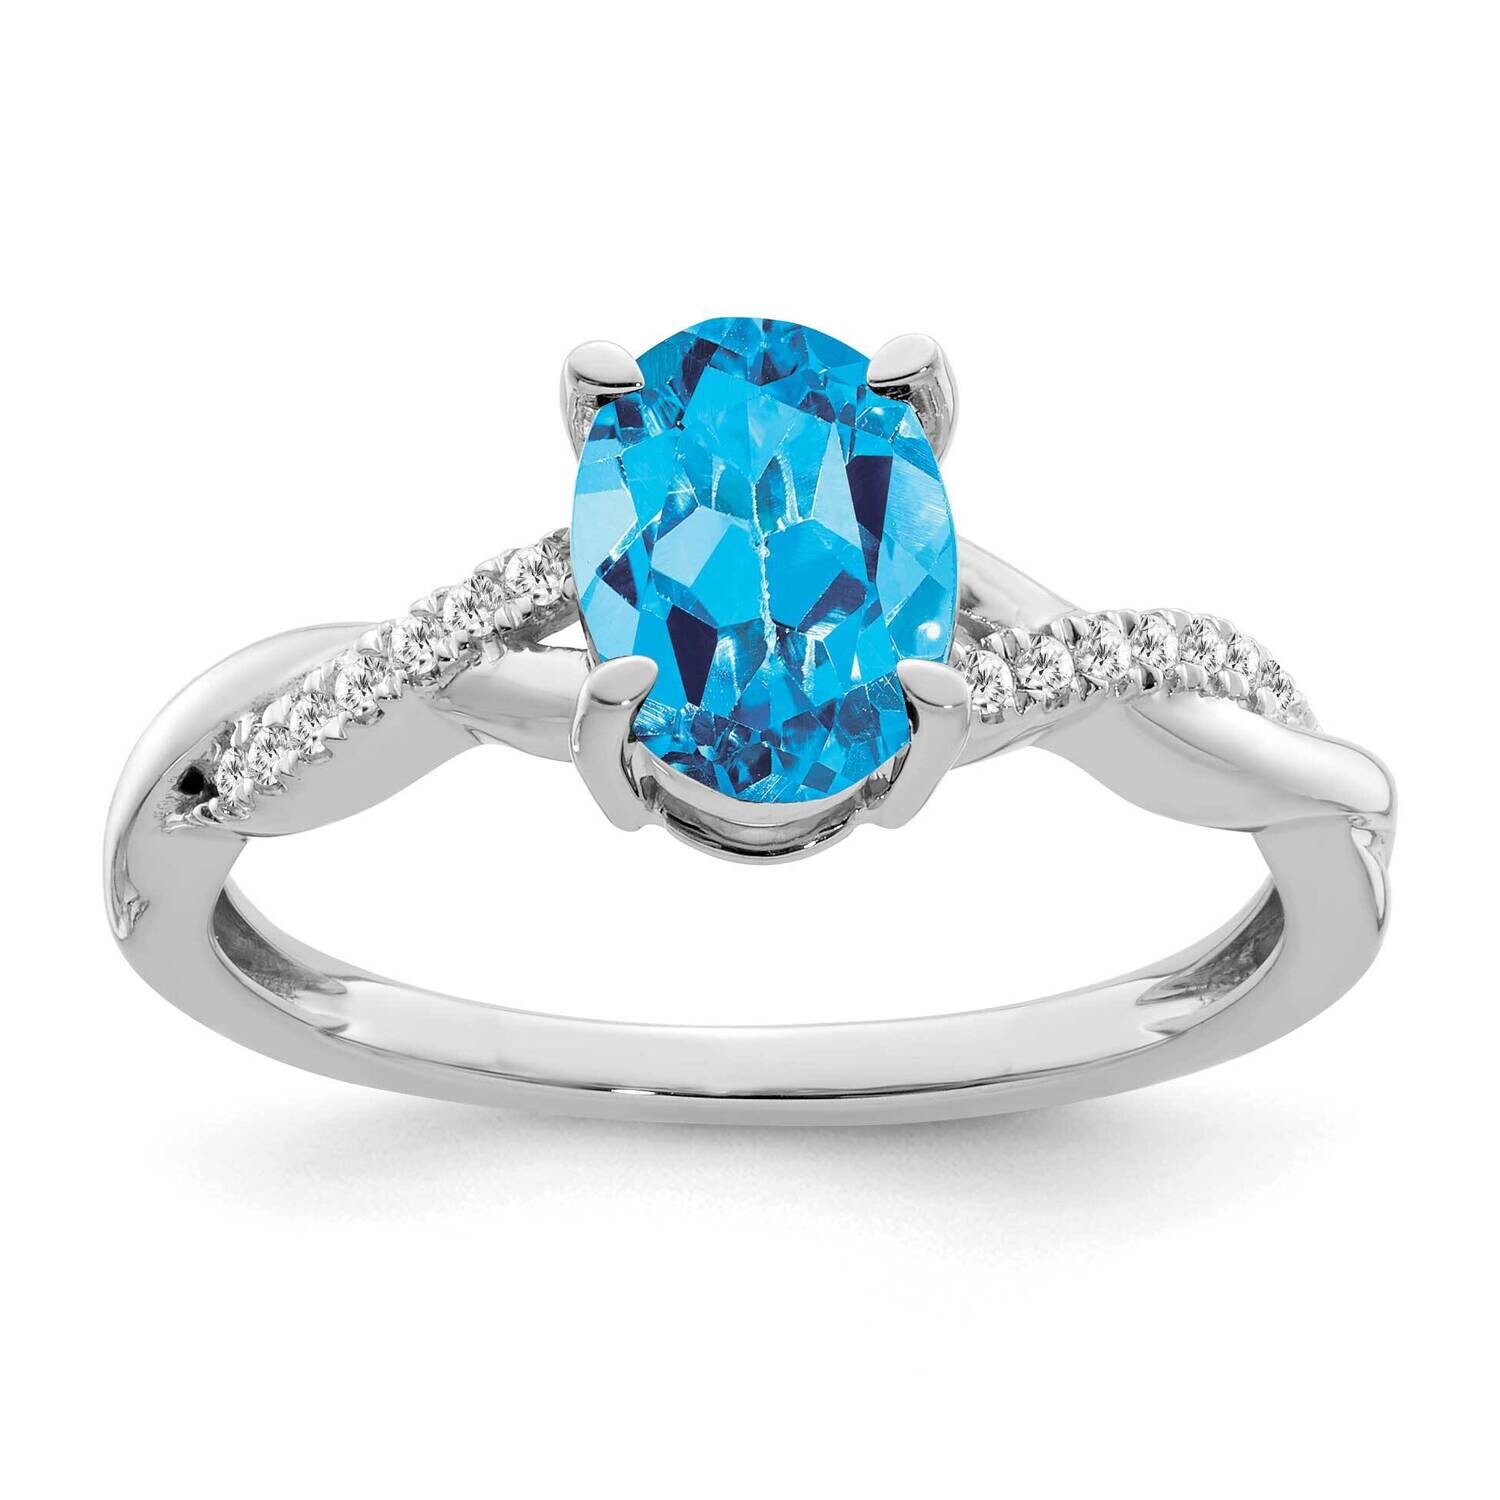 Oval Blue Topaz Diamond Ring 14k White Gold RM4235-BT-007-WA